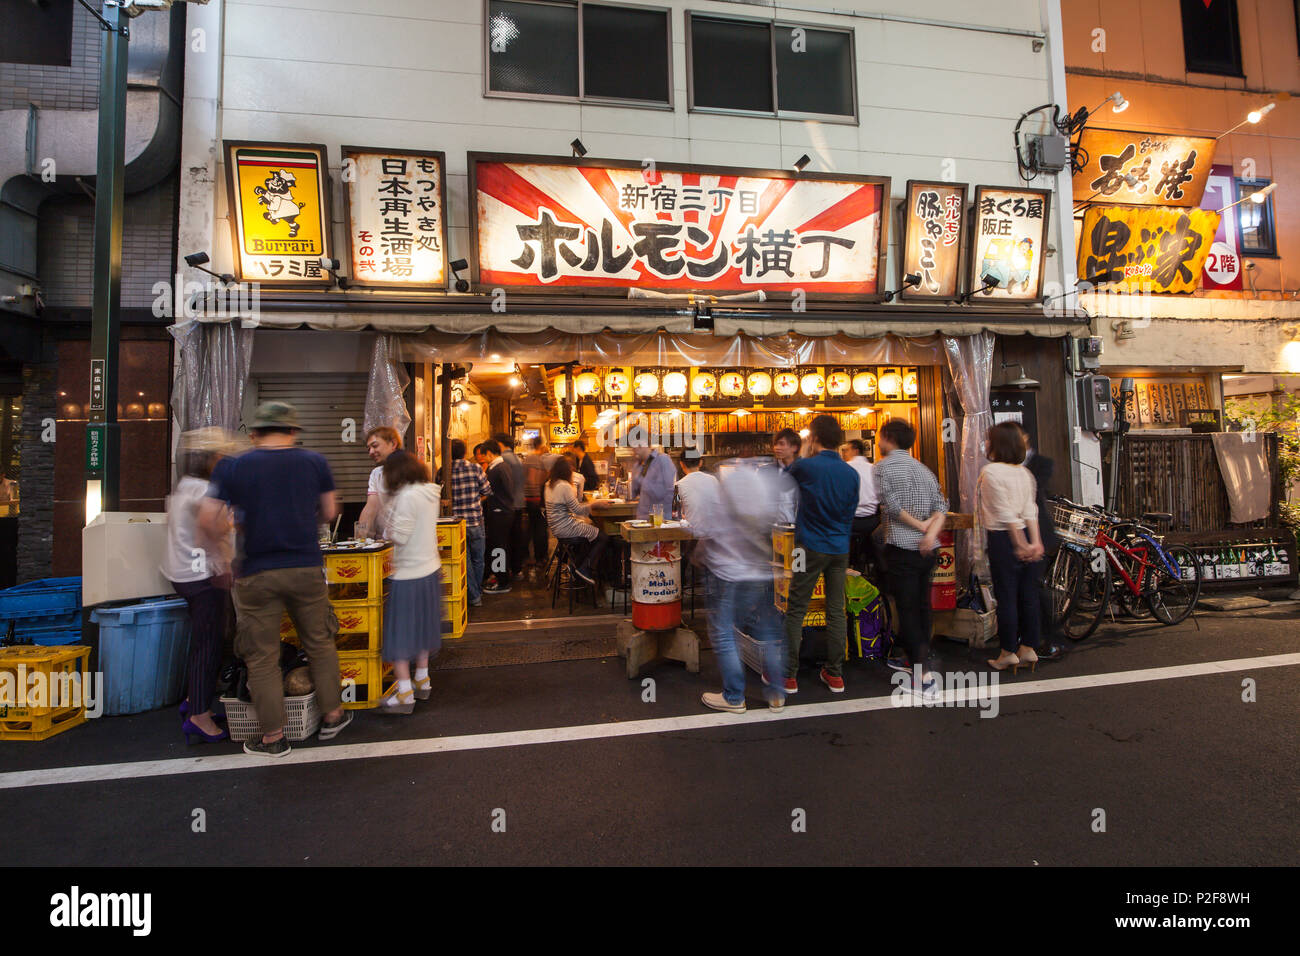 Japanese Izakaya at evening with young people enjoying eating and drinking together, Shinjuku, Tokyo, Japan Stock Photo